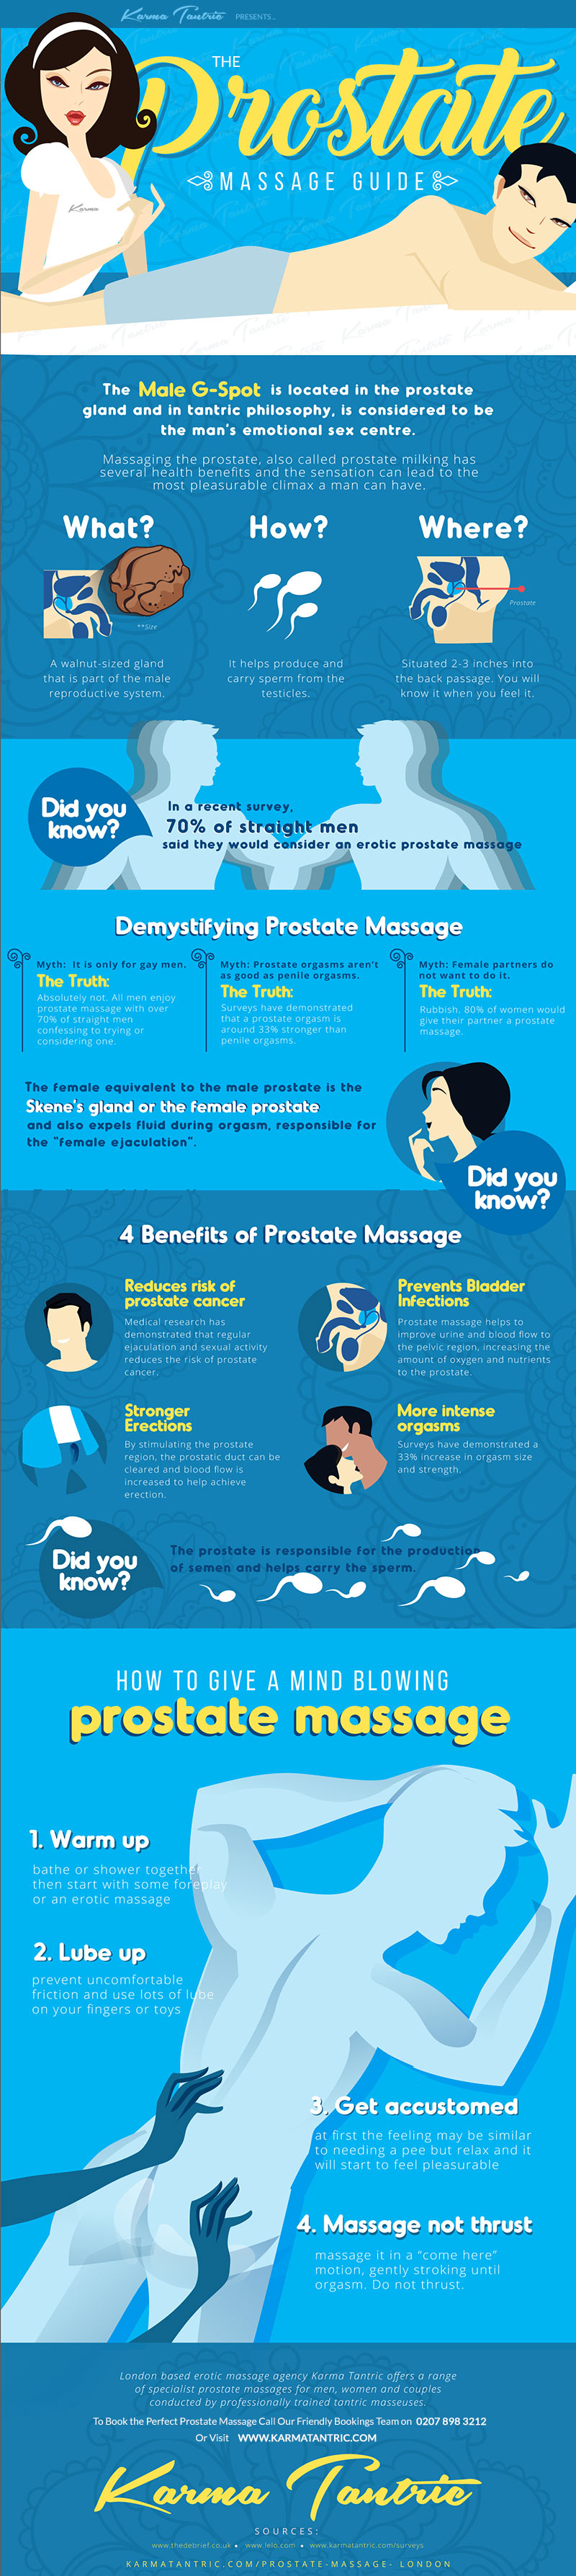 Erotic massage with prostata